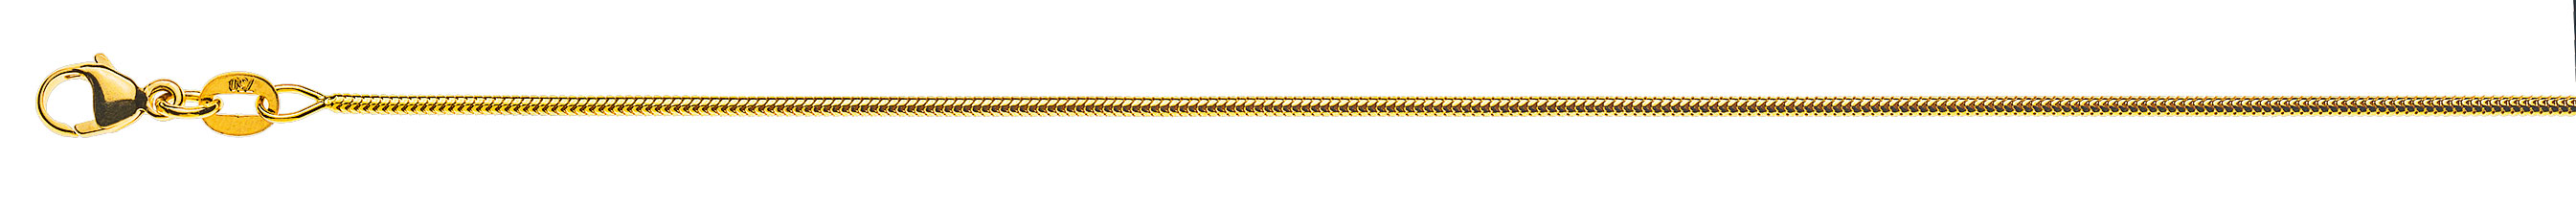 AURONOS Prestige Necklace yellow gold 18K snake chain 42cm 1.2mm